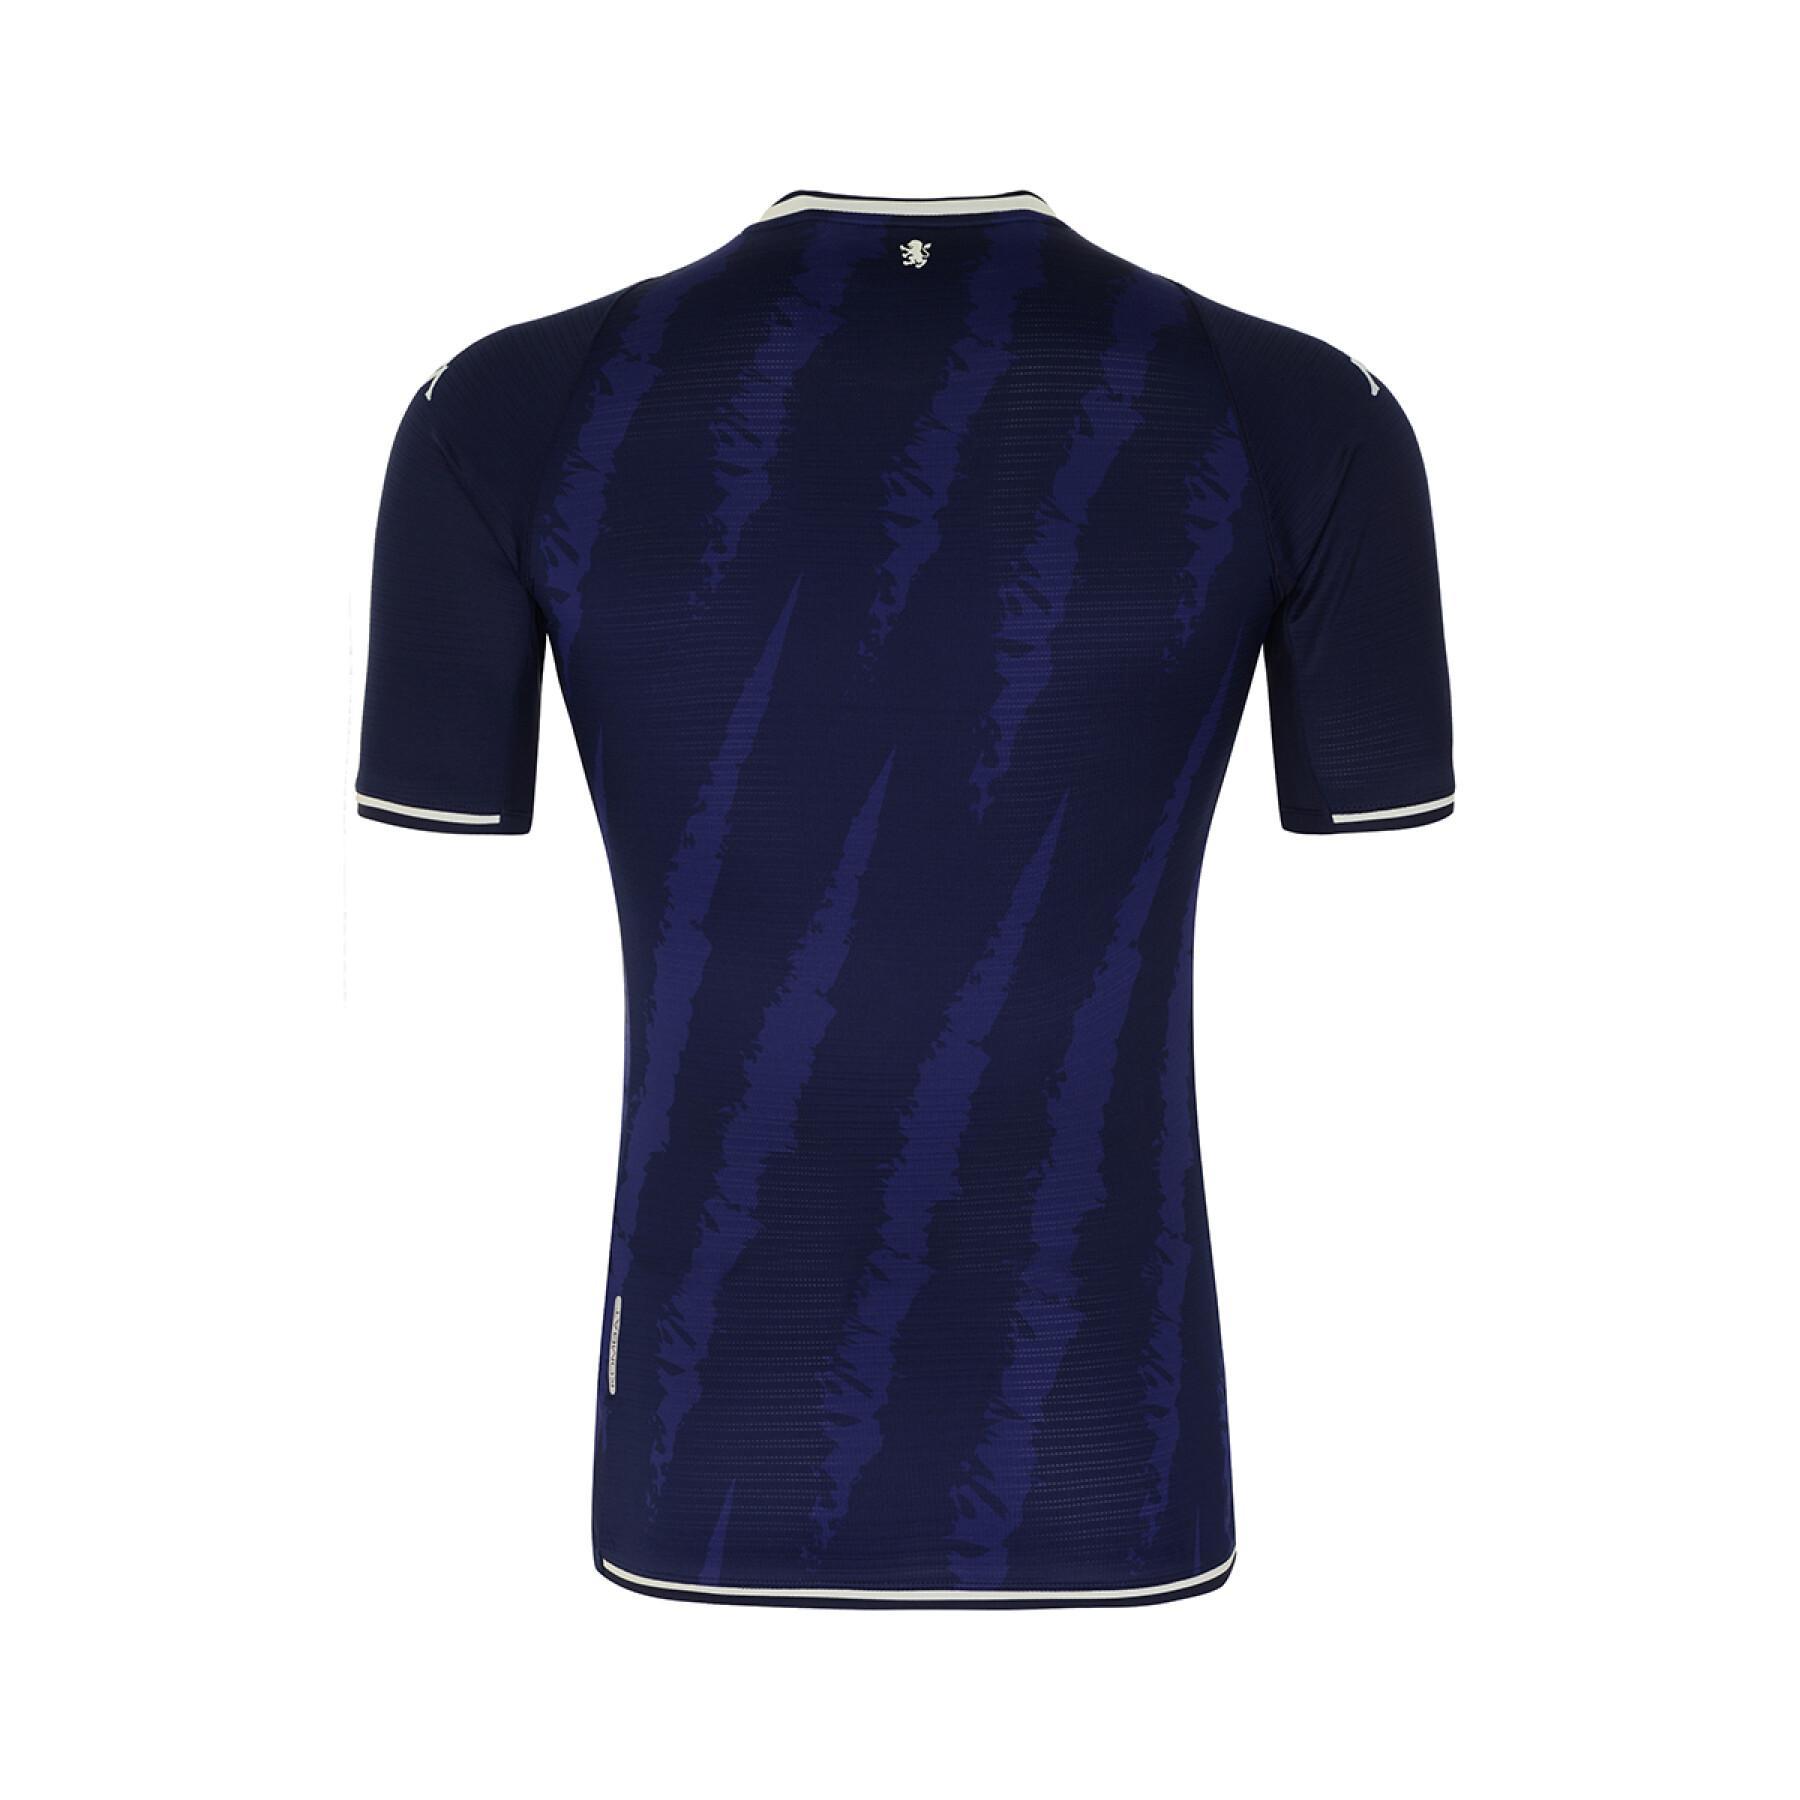 Autentyczna trzecia koszulka Aston Villa FC 2021/22